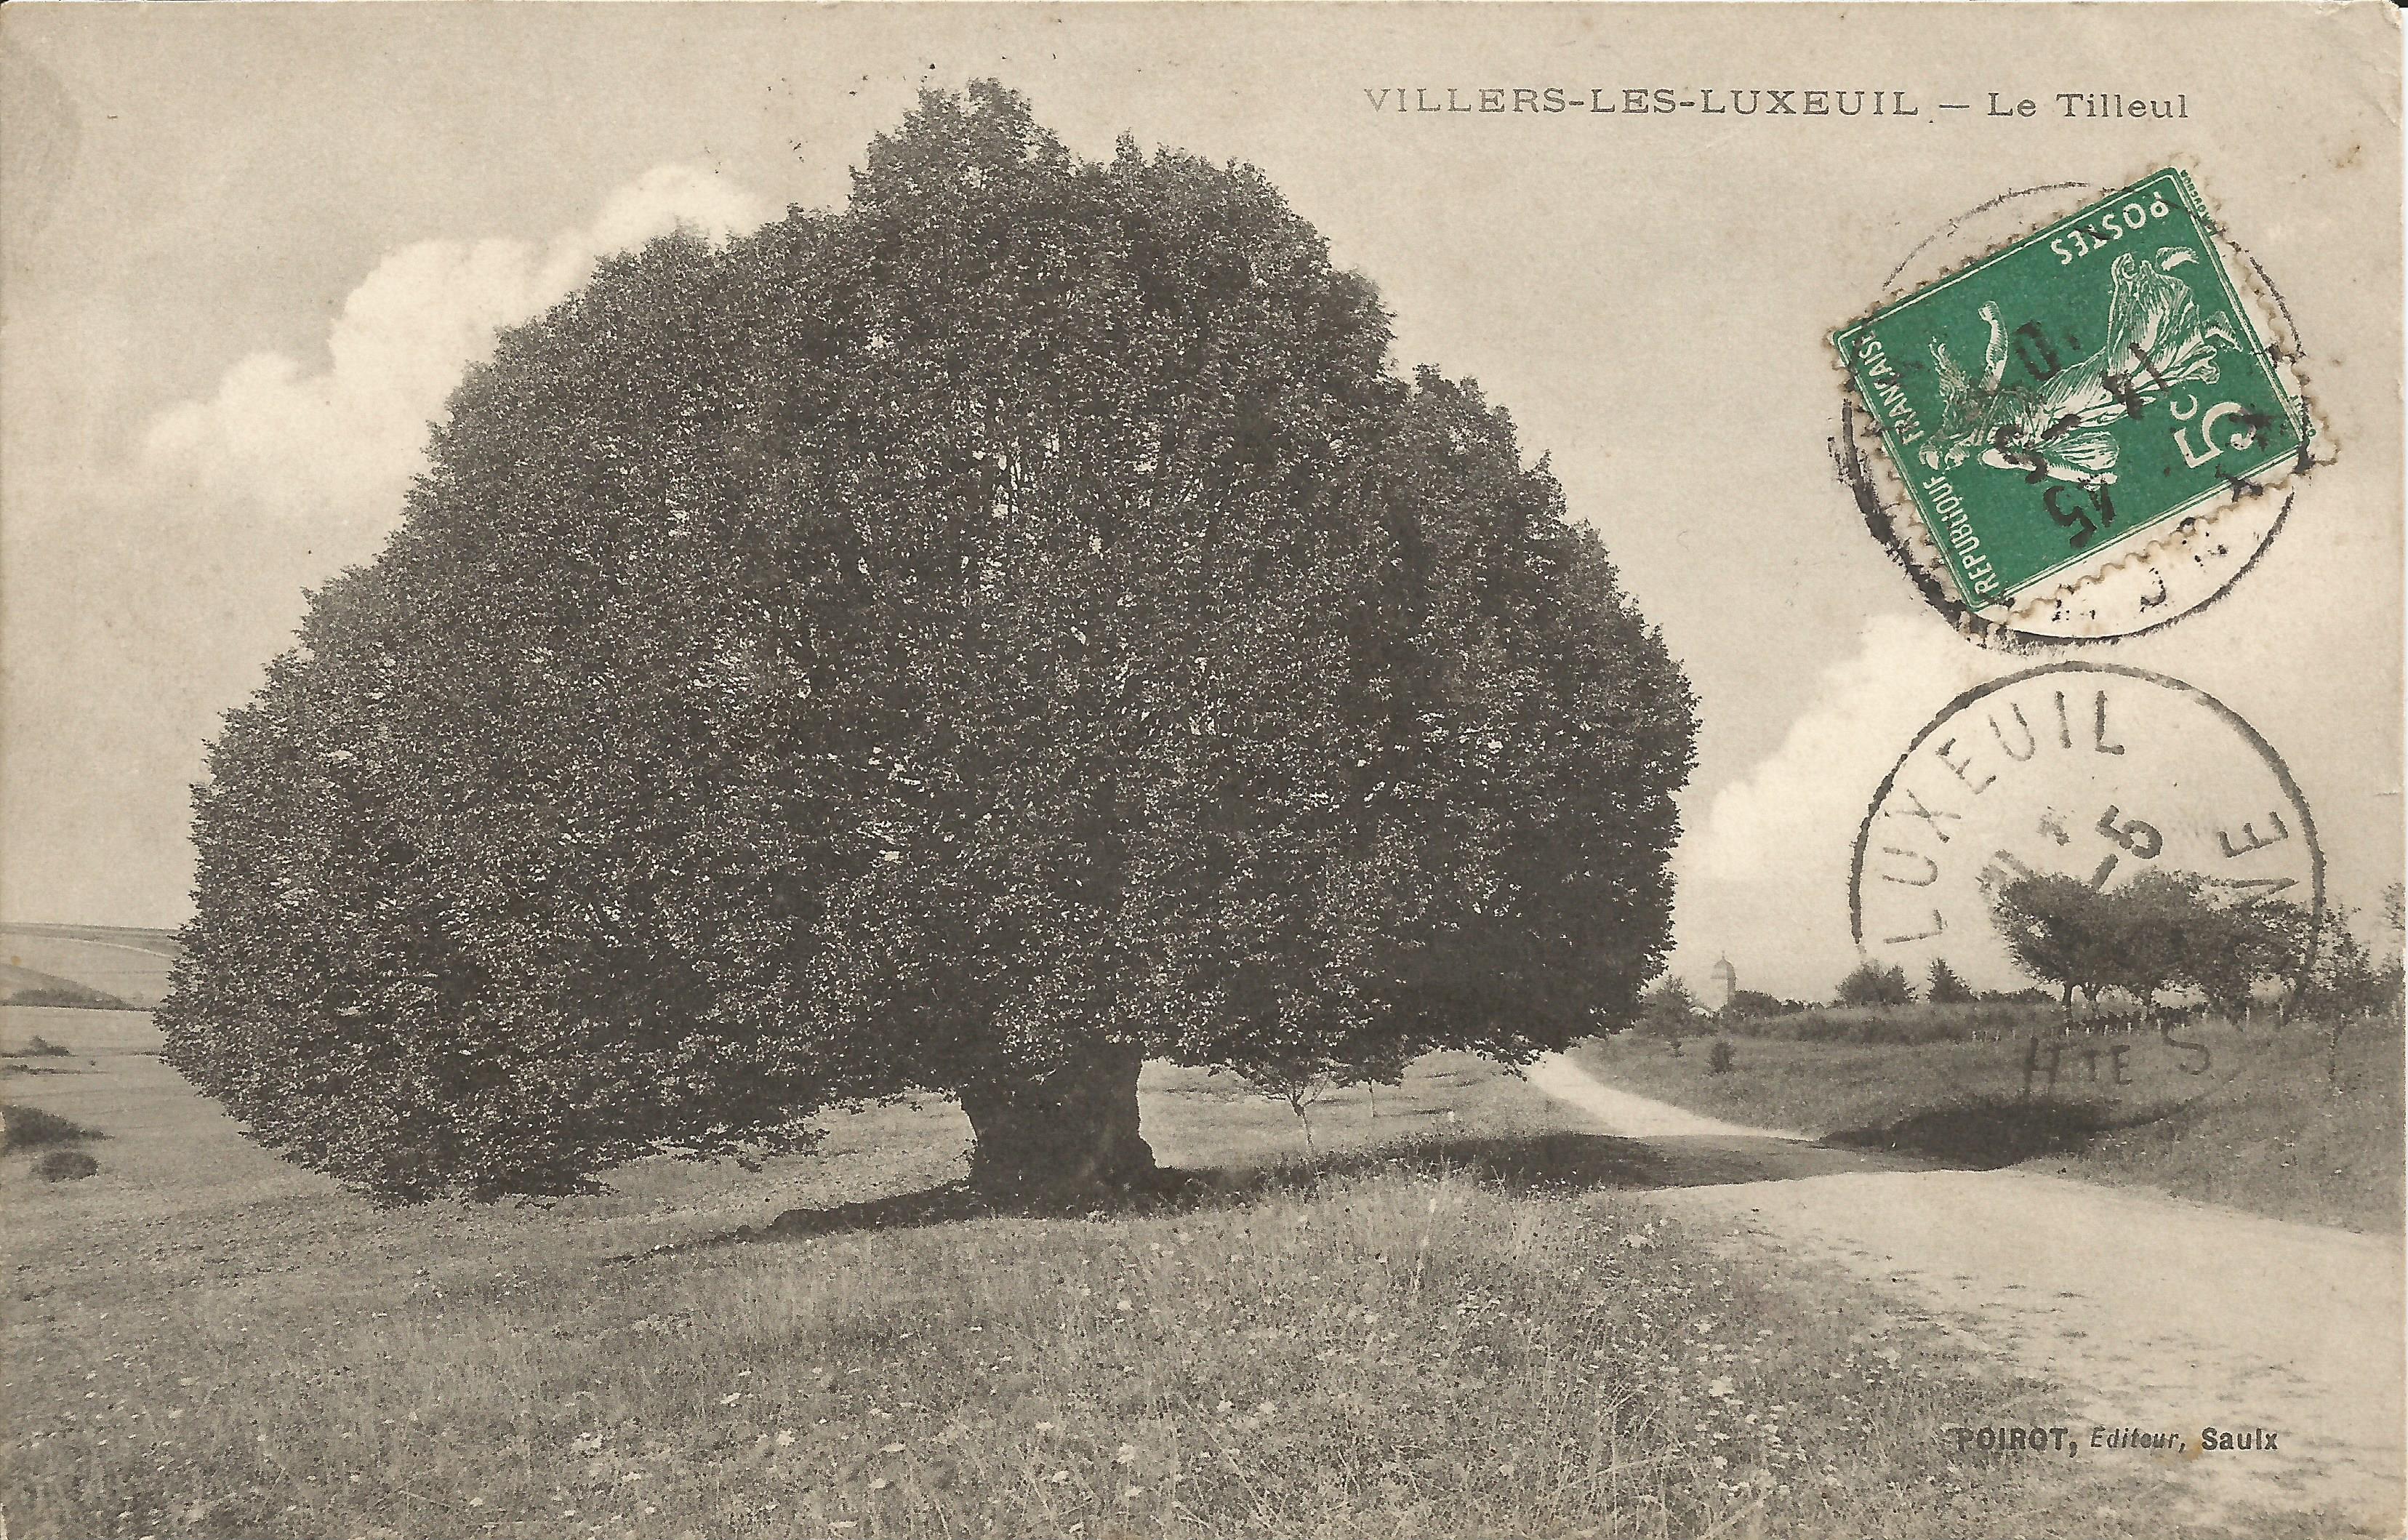 https://www.villers-les-luxeuil.com/projets/villers/files/images/Cartes_postales/Tilleul_2015/Le_Tilleul_3_1910.jpg